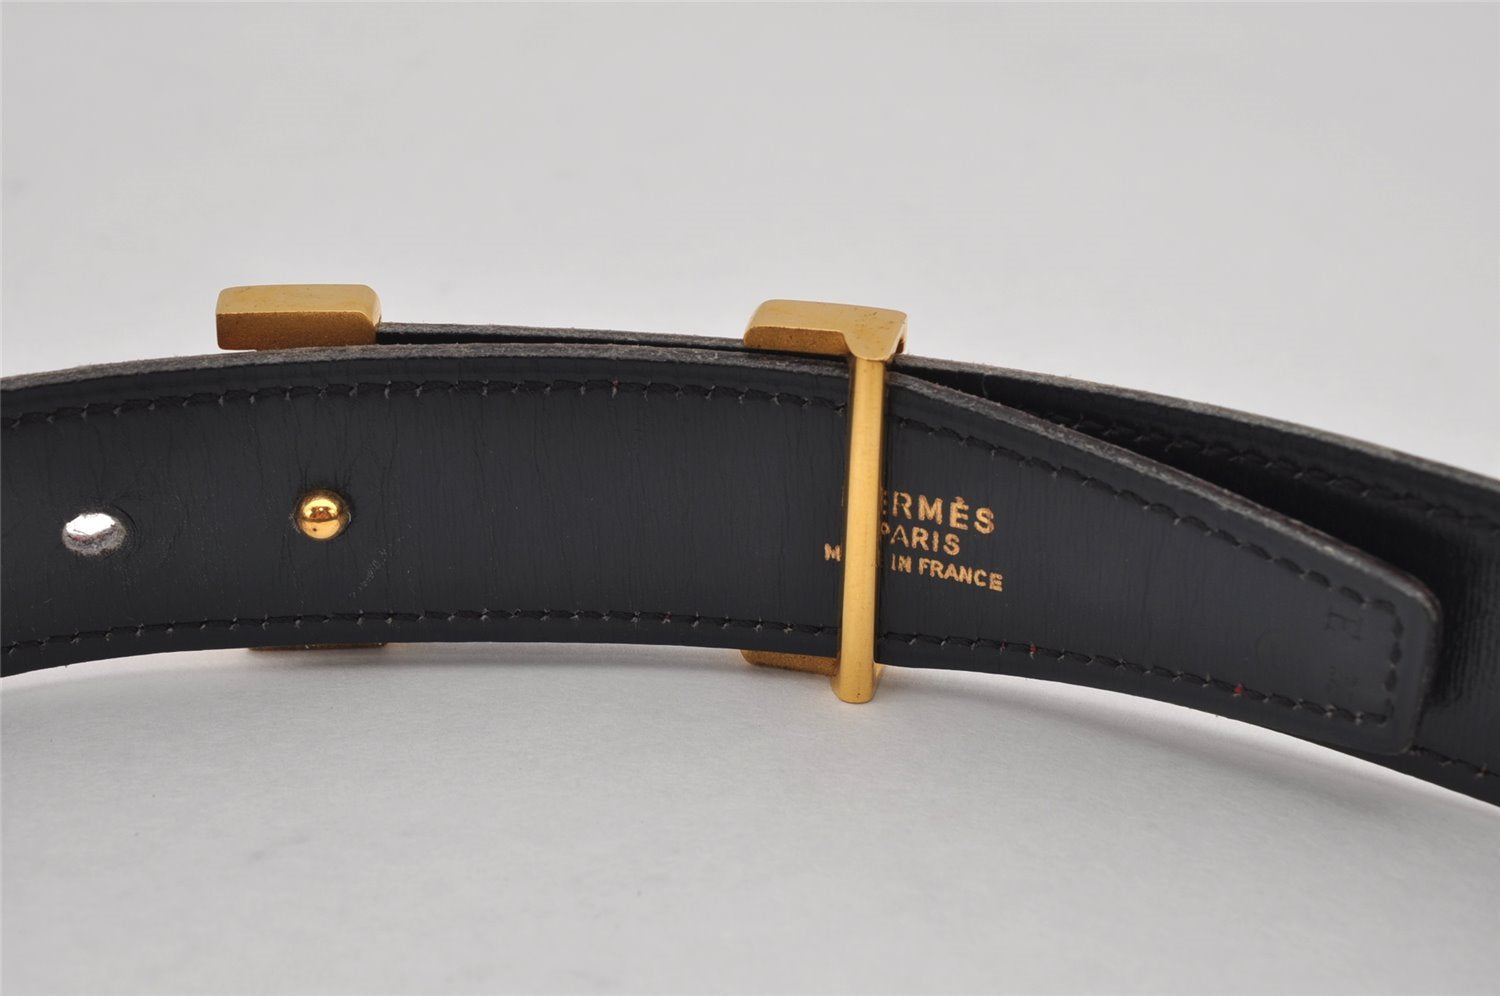 Authentic HERMES Constance Leather Belt Size 25.6-27.2